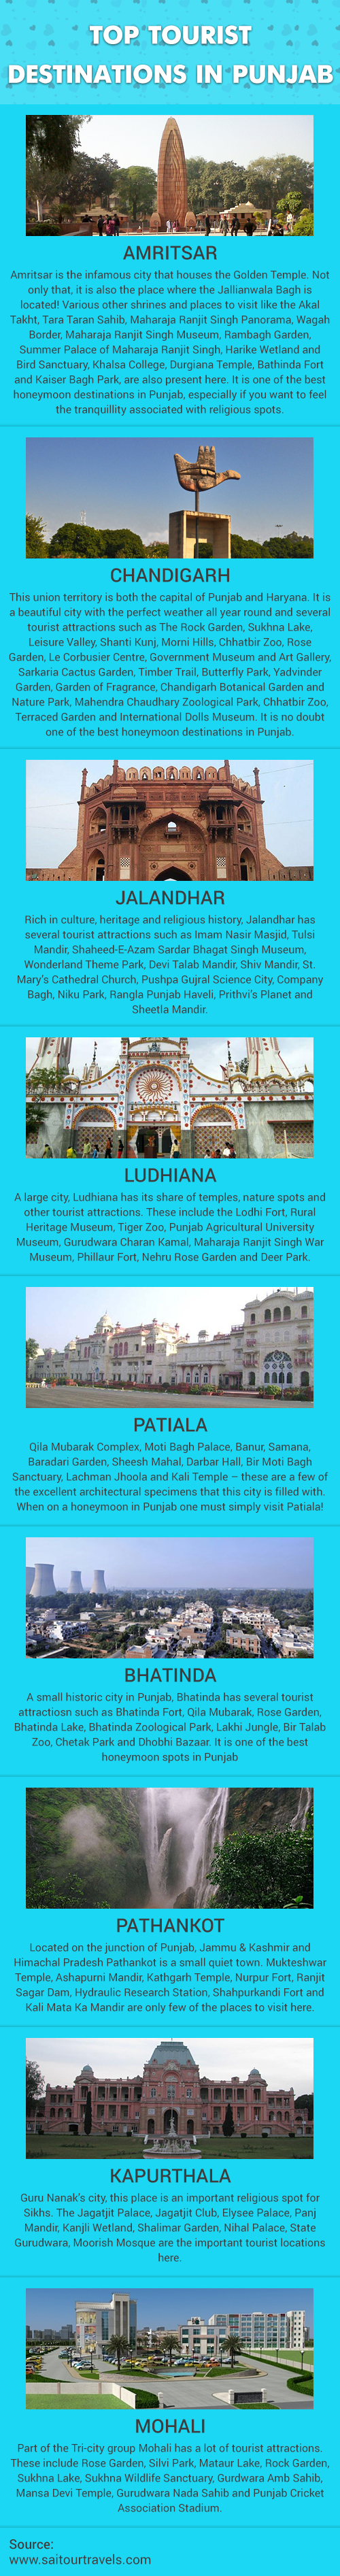 Top Tourist Destinations in Punjab